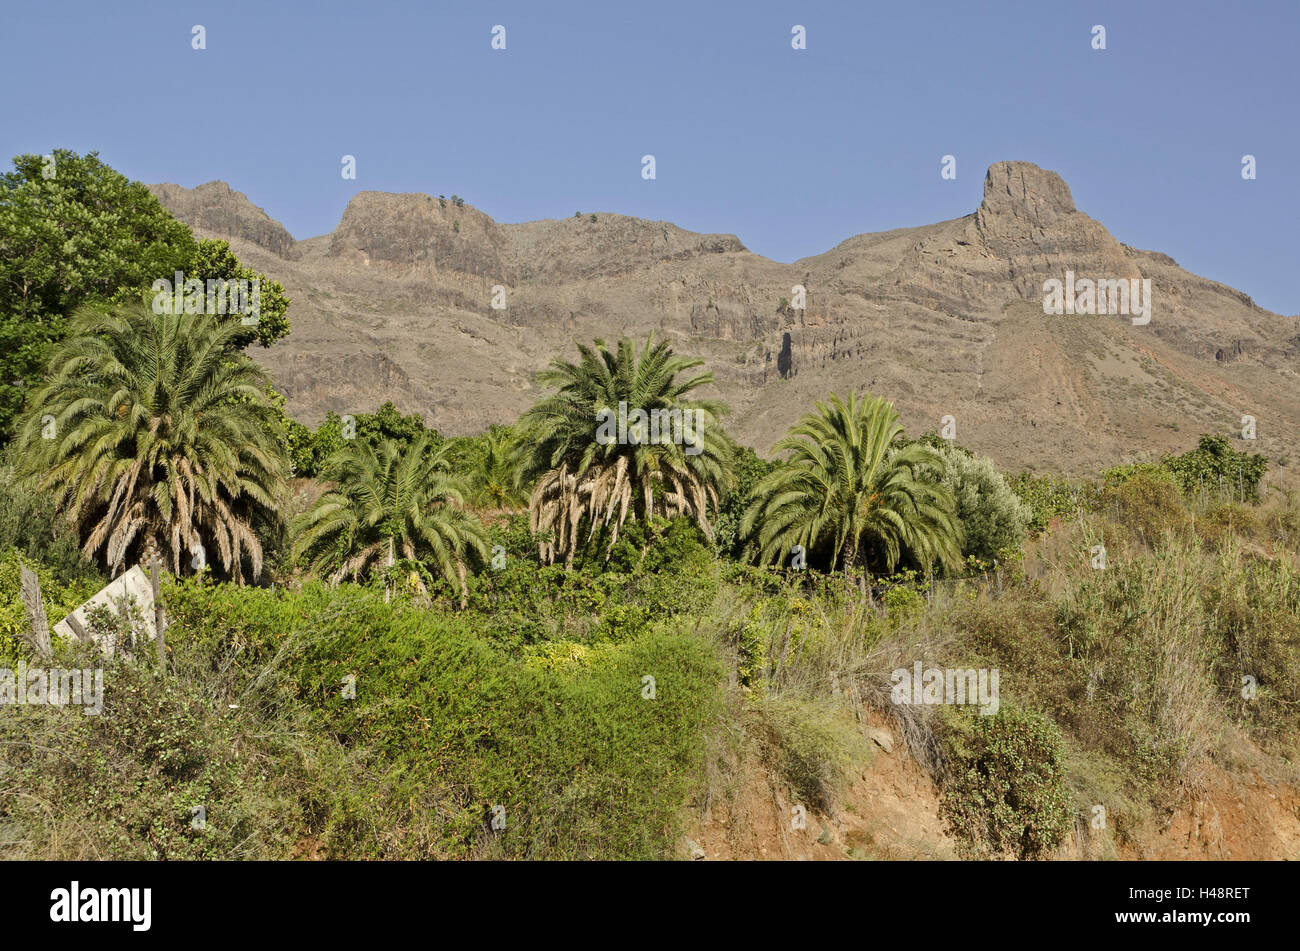 Spain, Canary island, grain Canaria, Barranco de Fataga, mountainous region, palms, Stock Photo